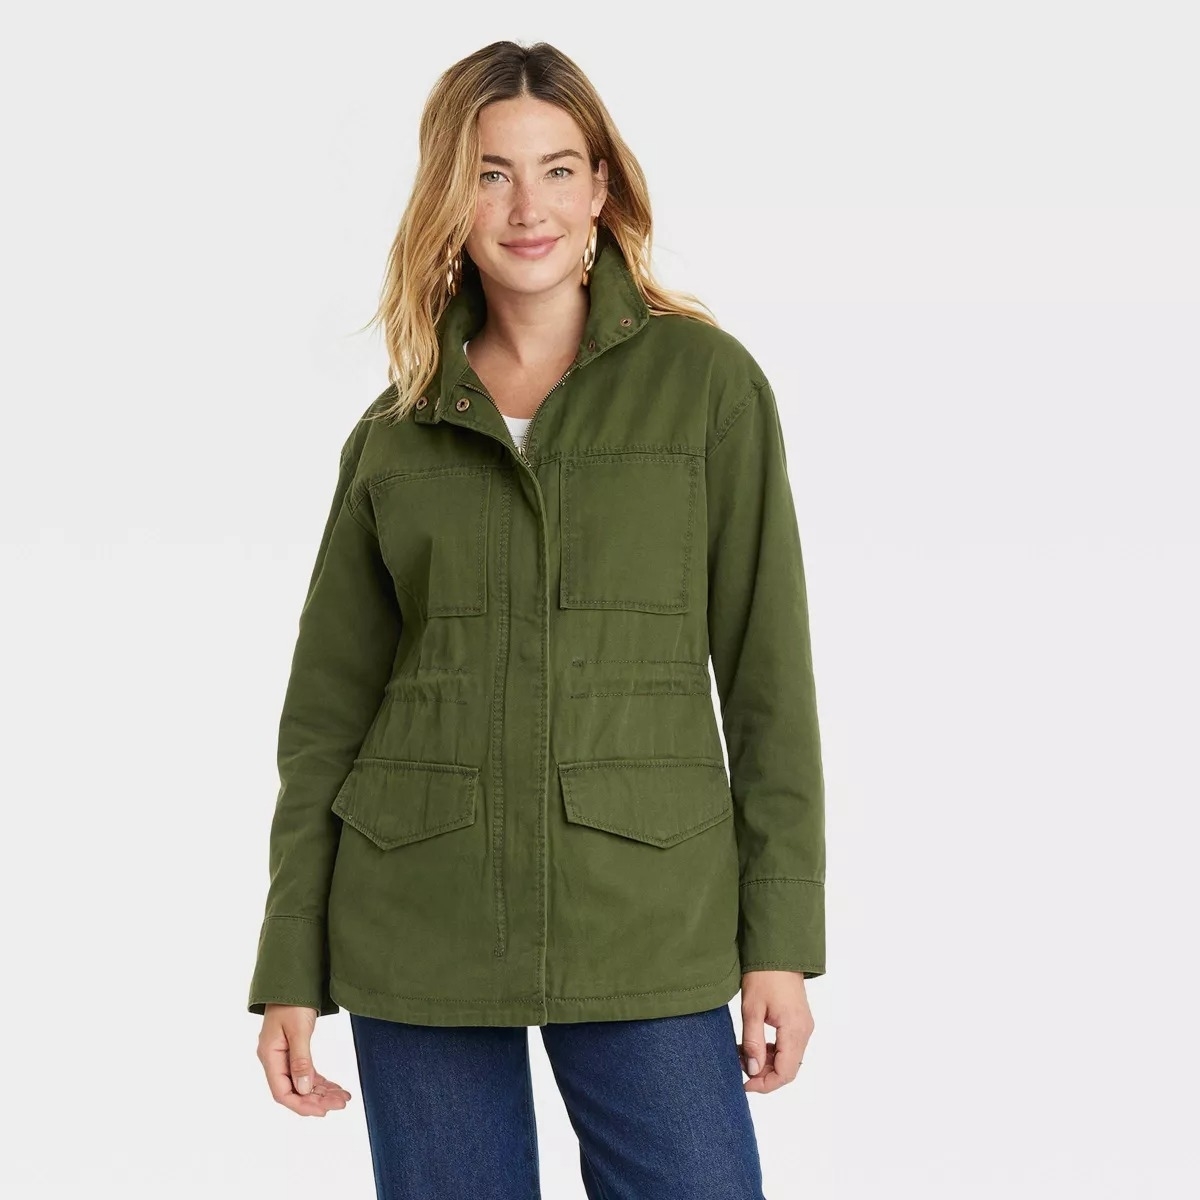 green utility jacket on model